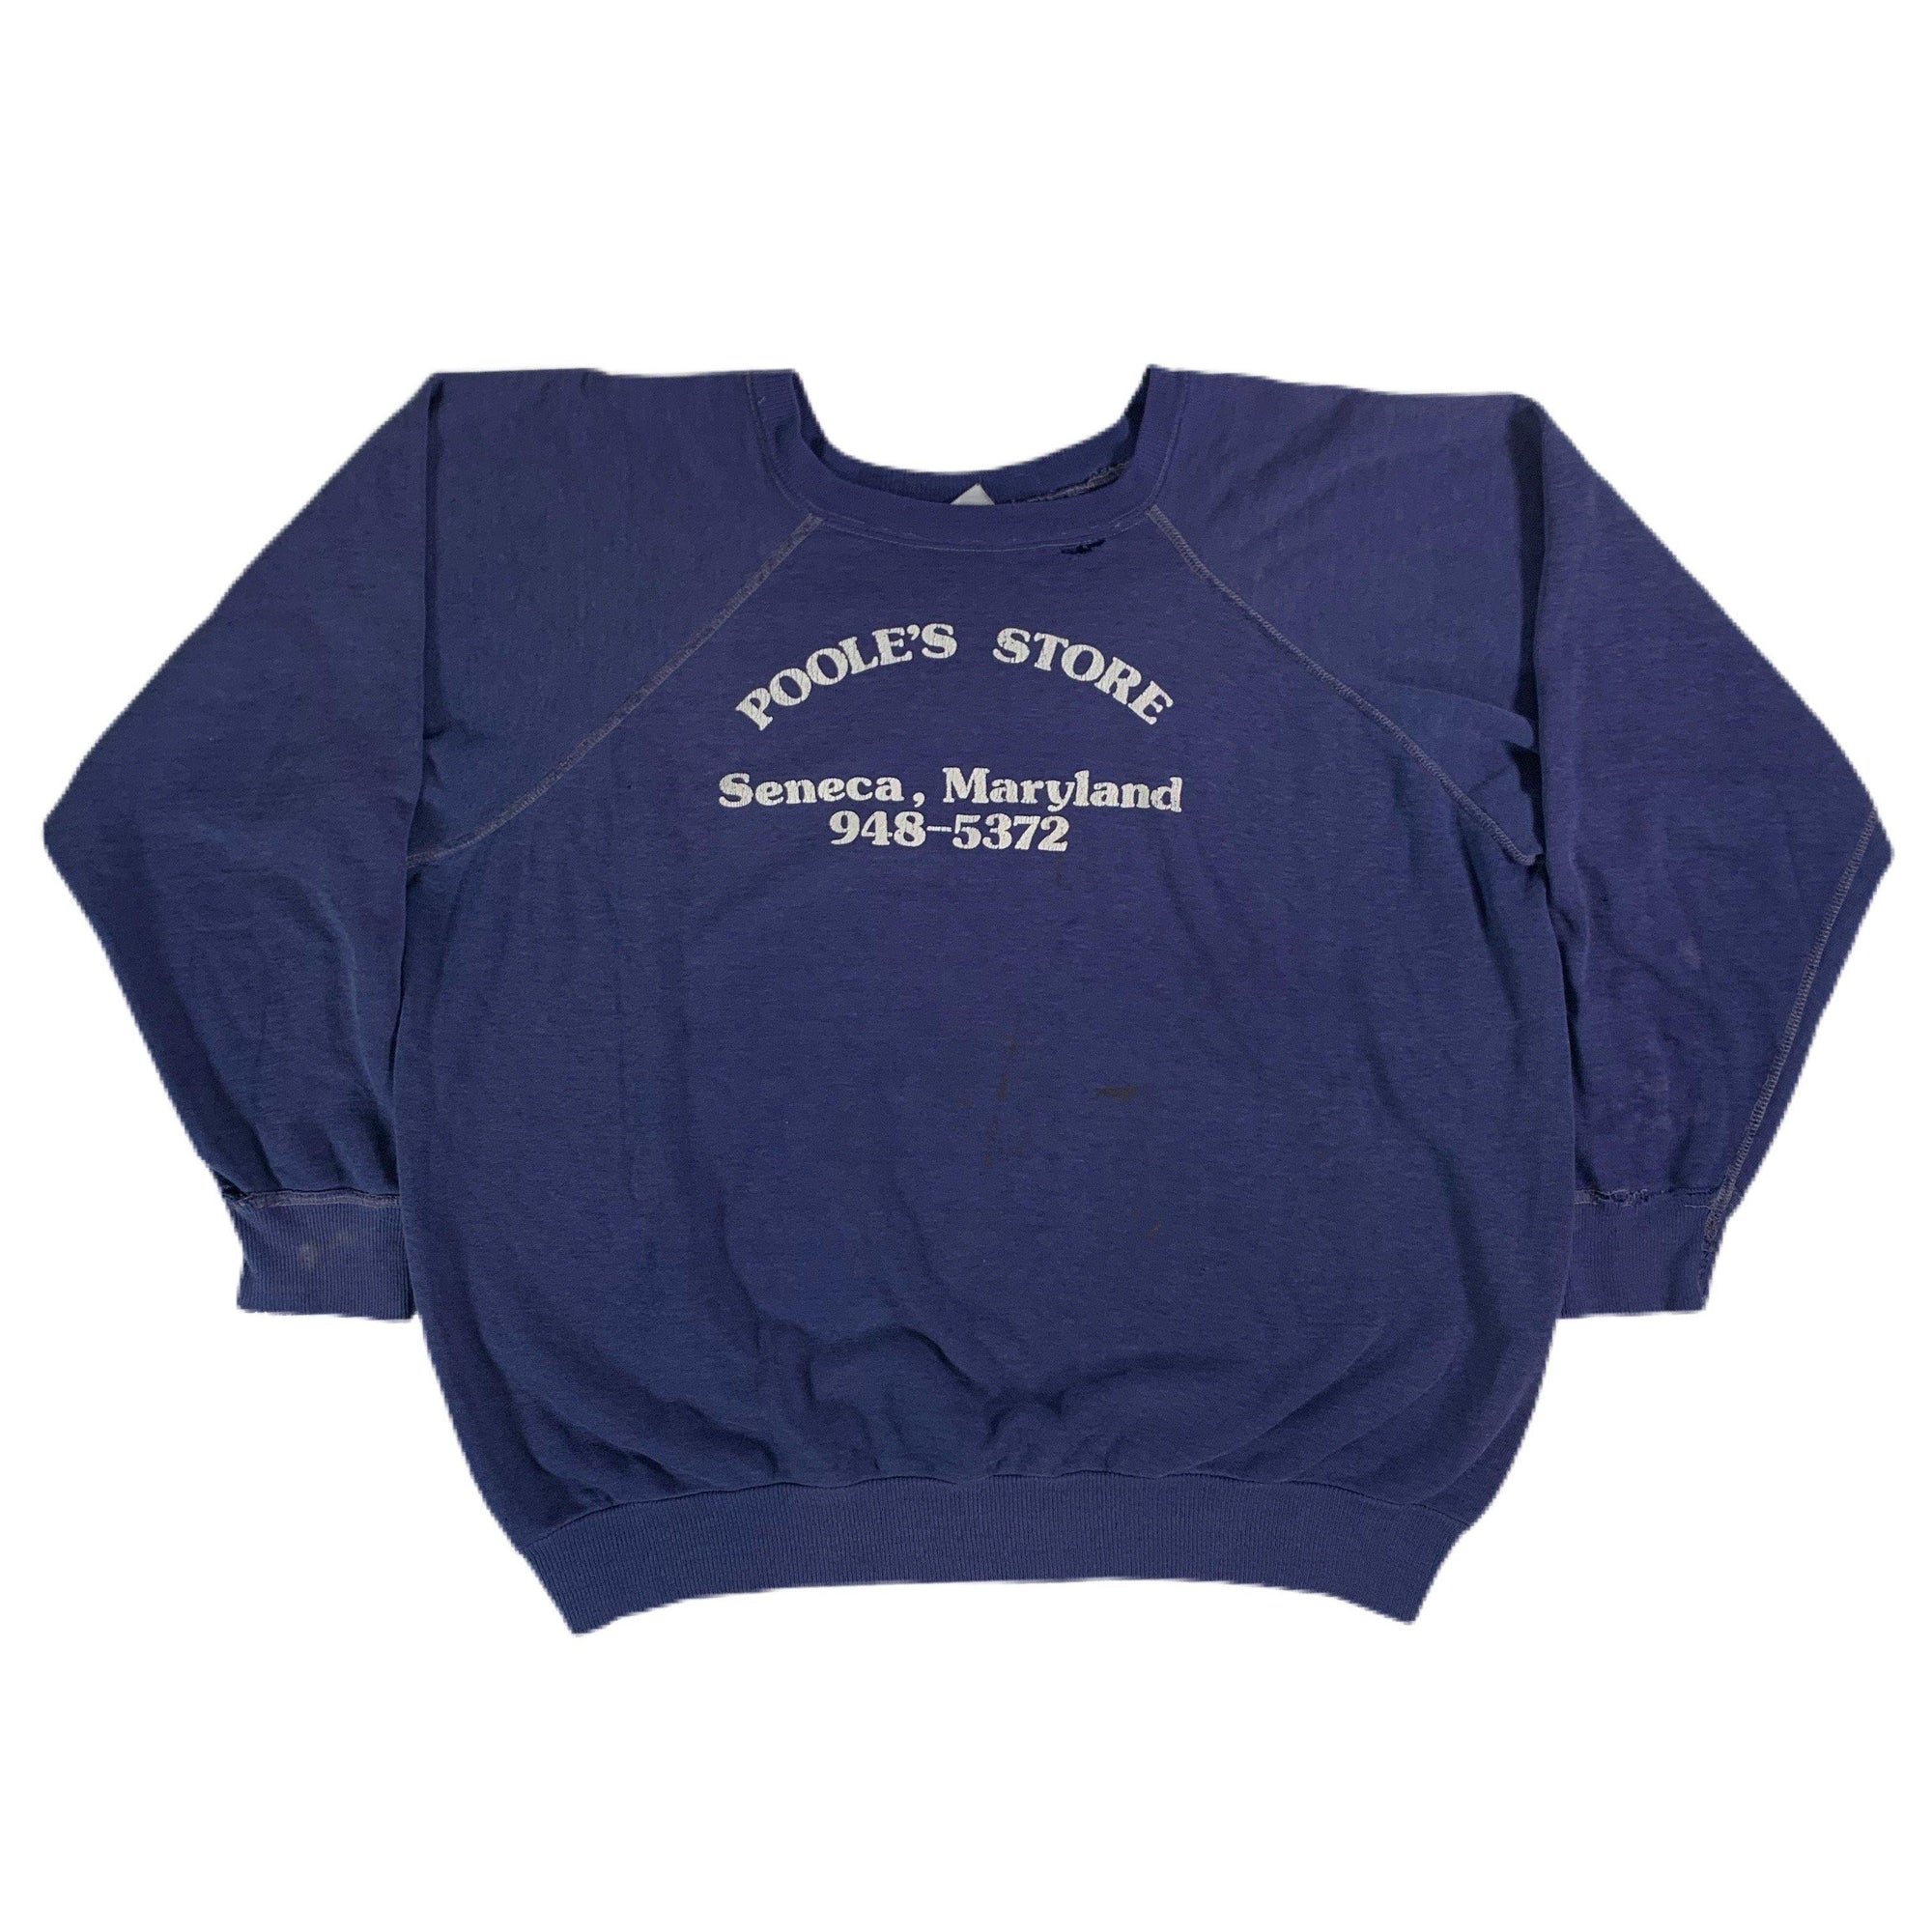 Vintage Maryland "Poole's Store" Raglan Sweatshirt - jointcustodydc